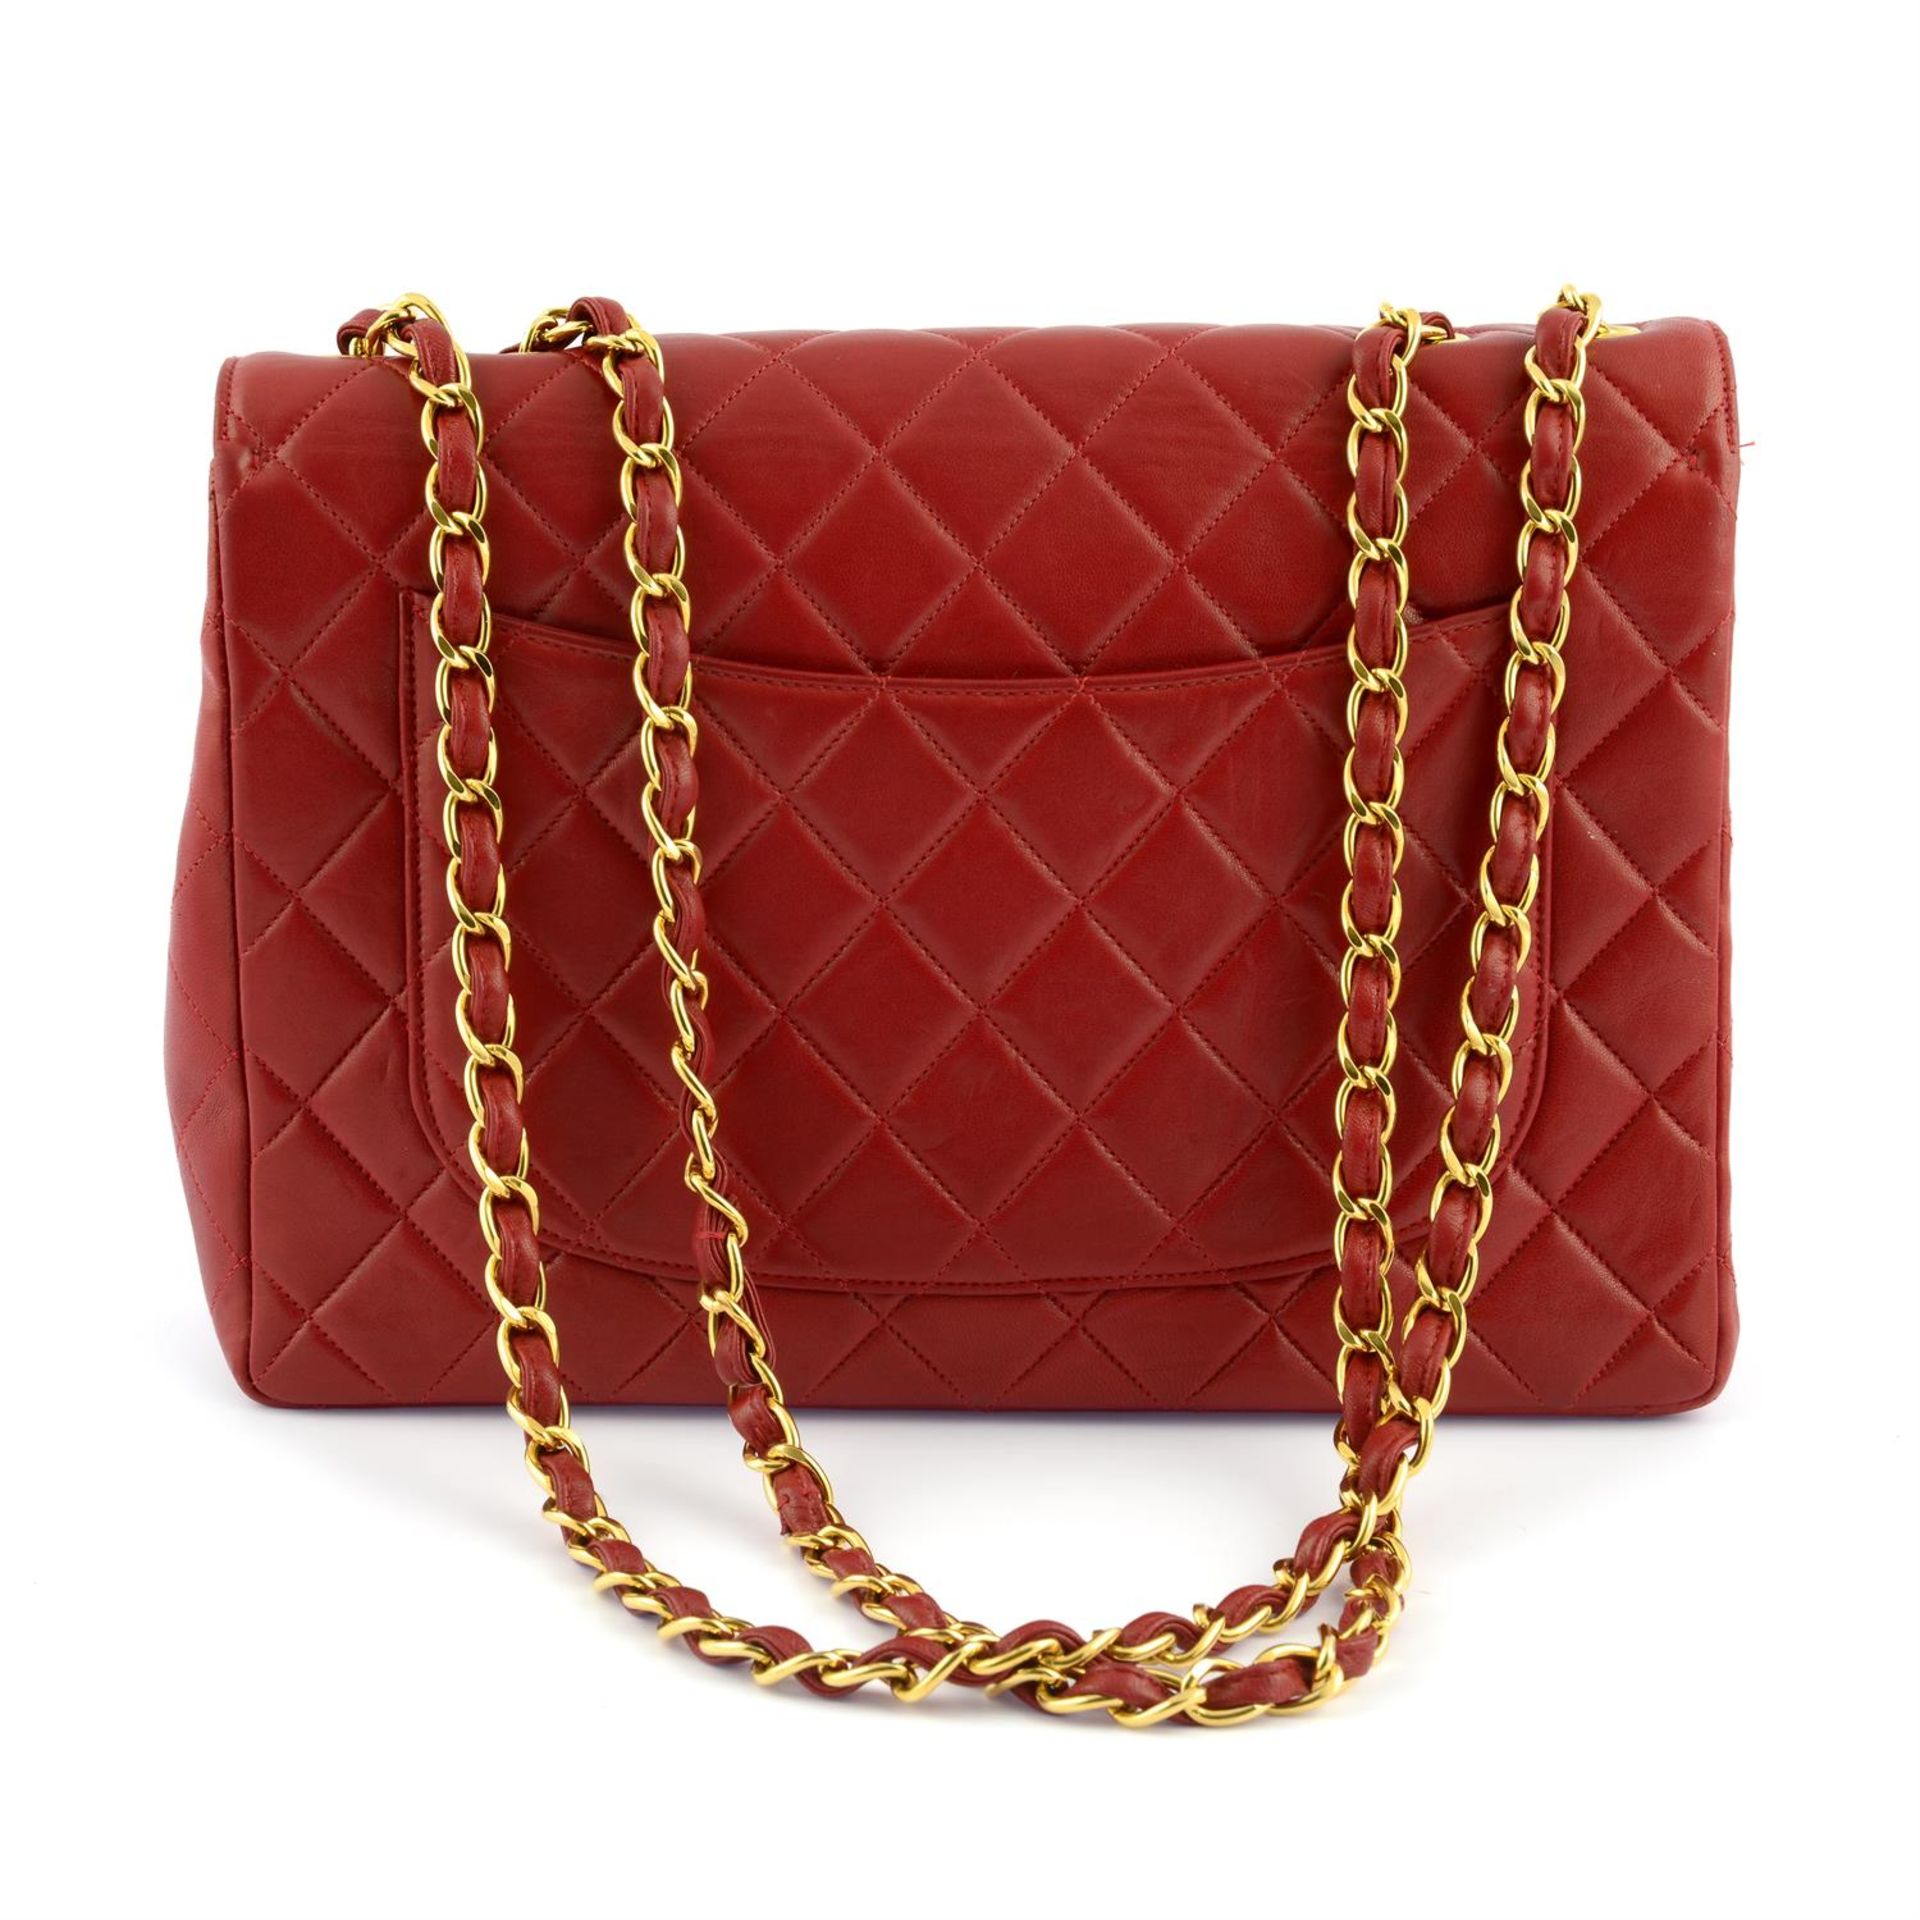 CHANEL - a red lambskin leather Jumbo flap handbag. - Bild 2 aus 6